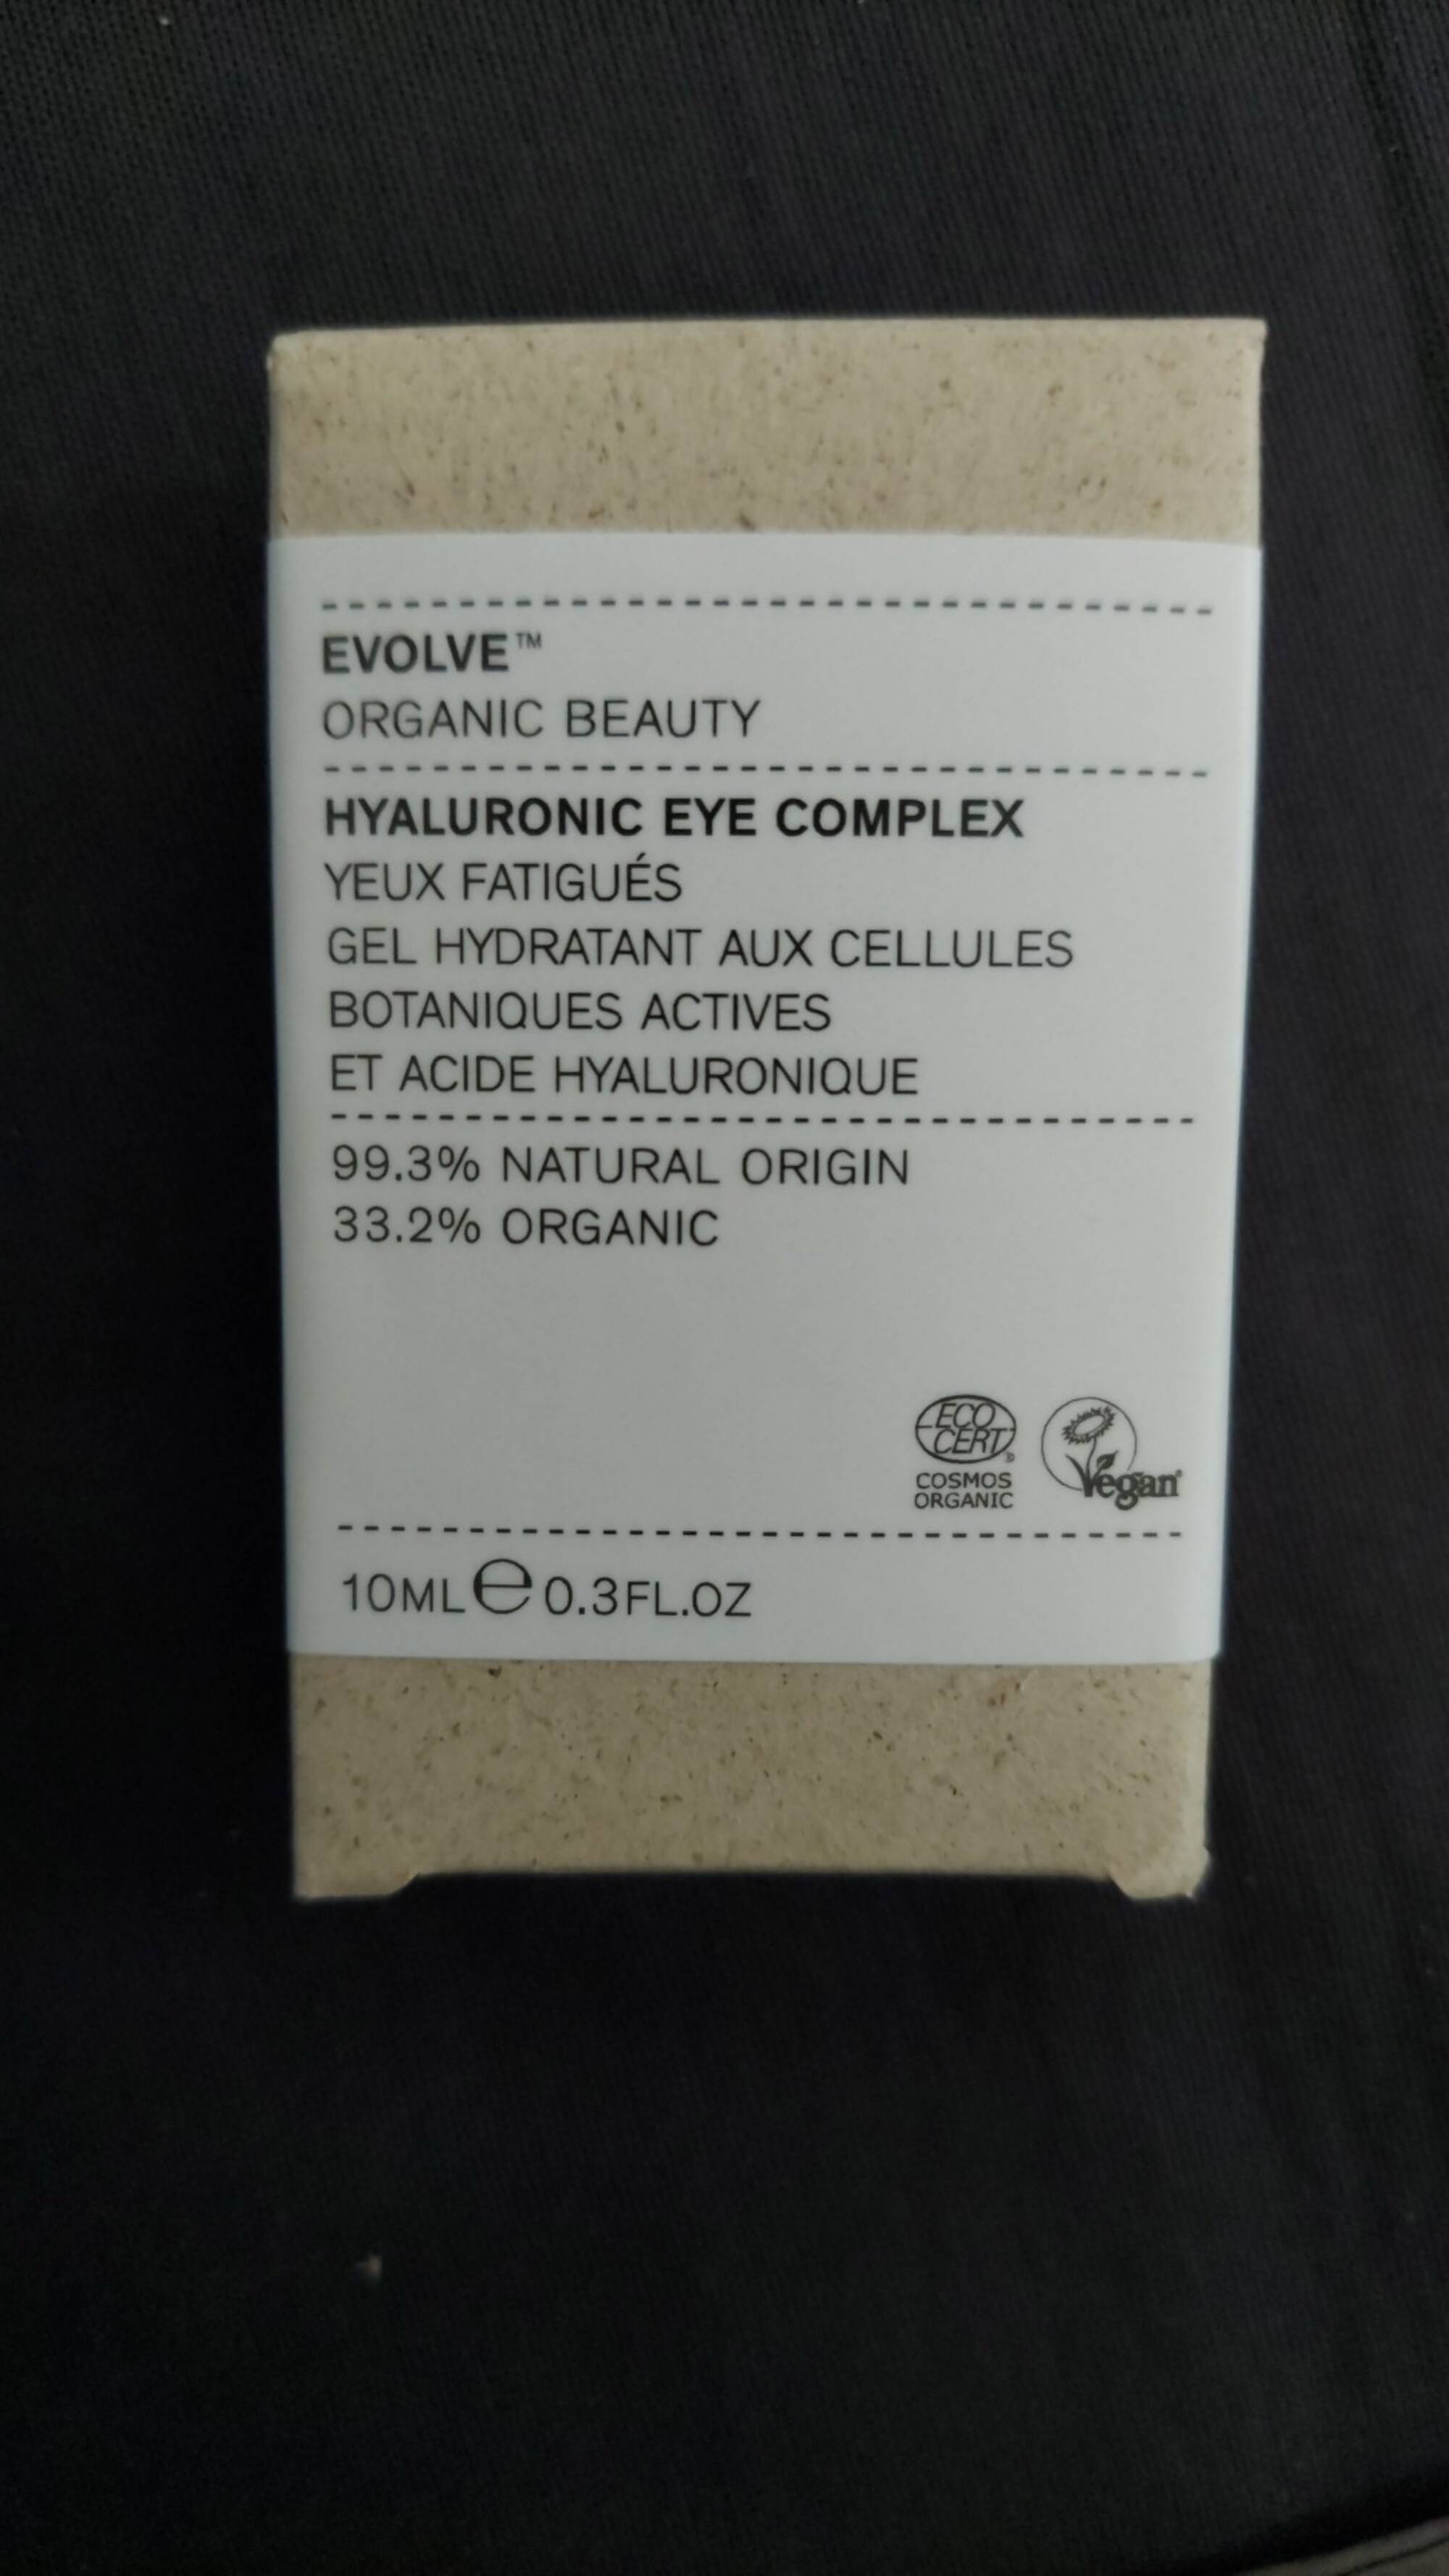 EVOLVE - Hyaluronic eye complex - Gel hydratant